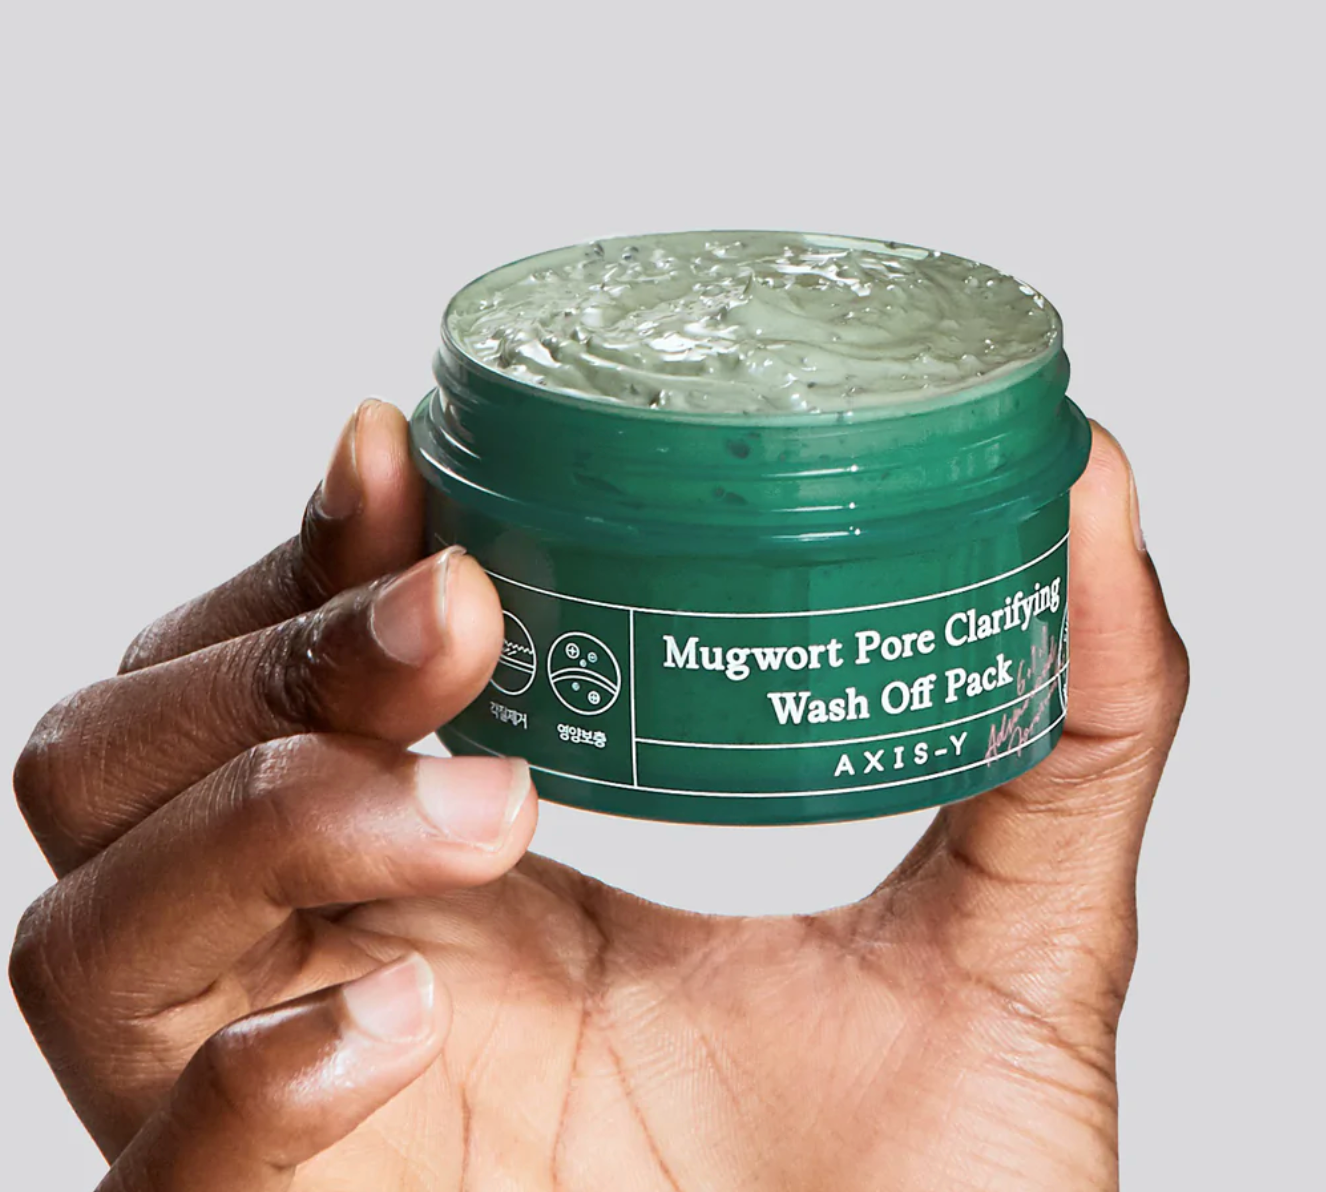 Mugwort Pore Clarifying Wash Off Pack